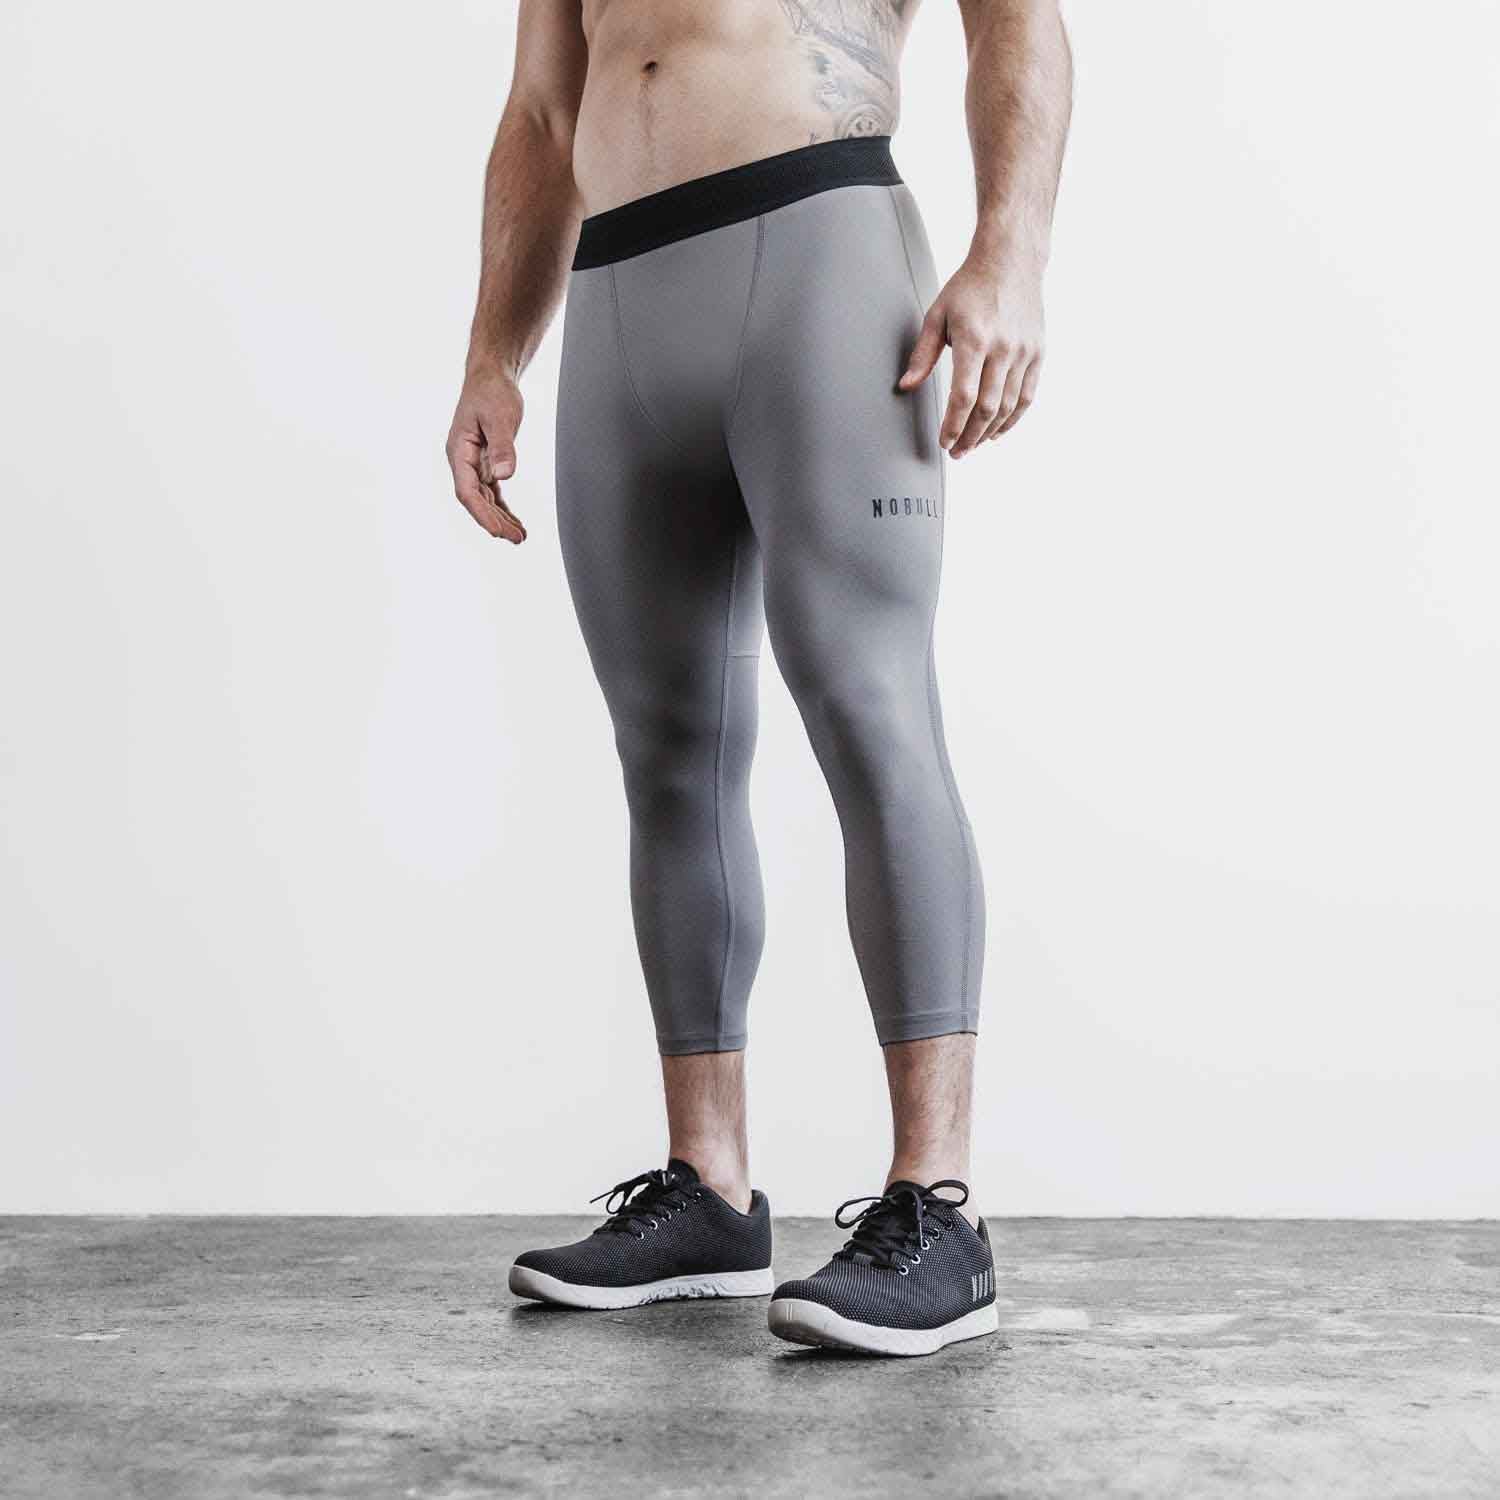 Men Compression Shorts Brief Skin Base Layer Tight Gym Under Pants Sport  Active/